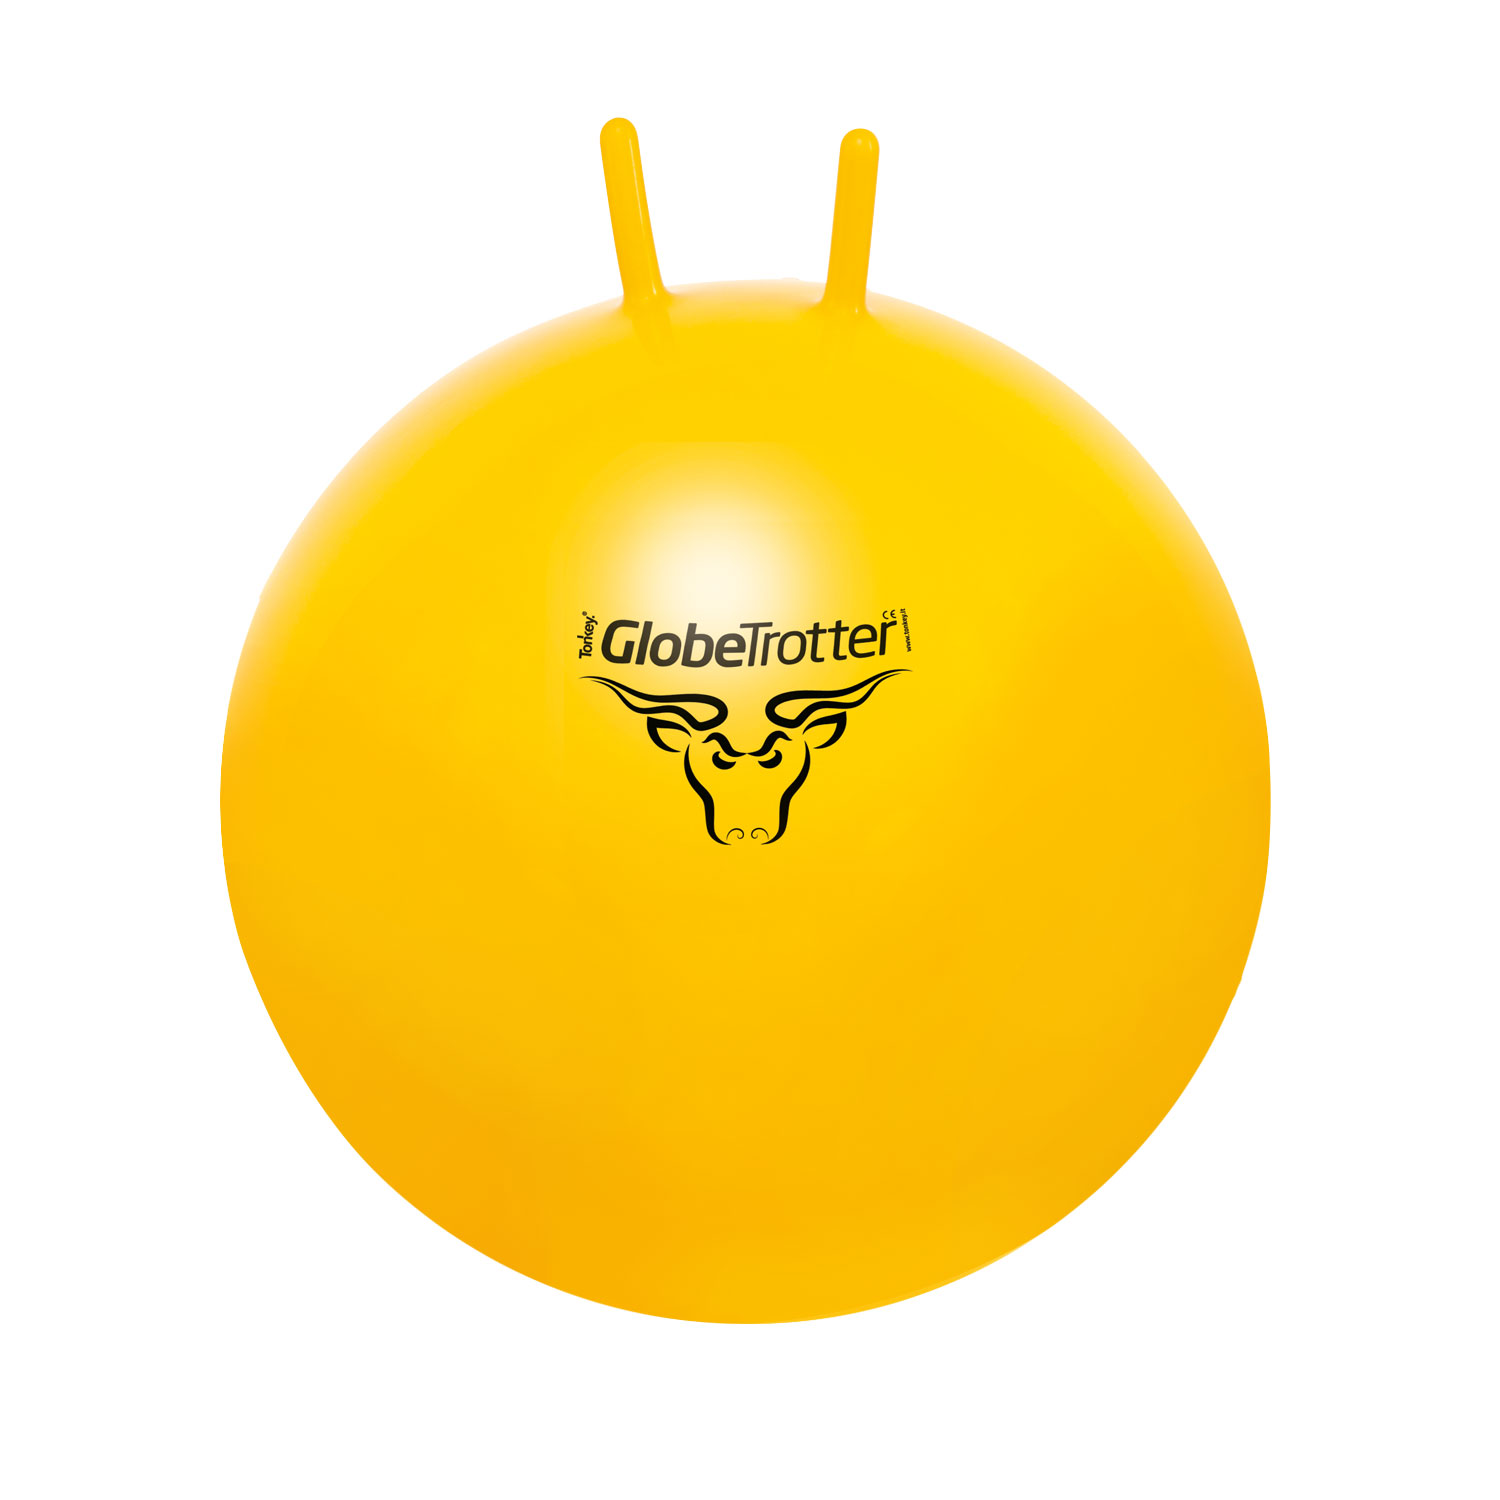 Original Pezzi® Globetrotter Hüpfball